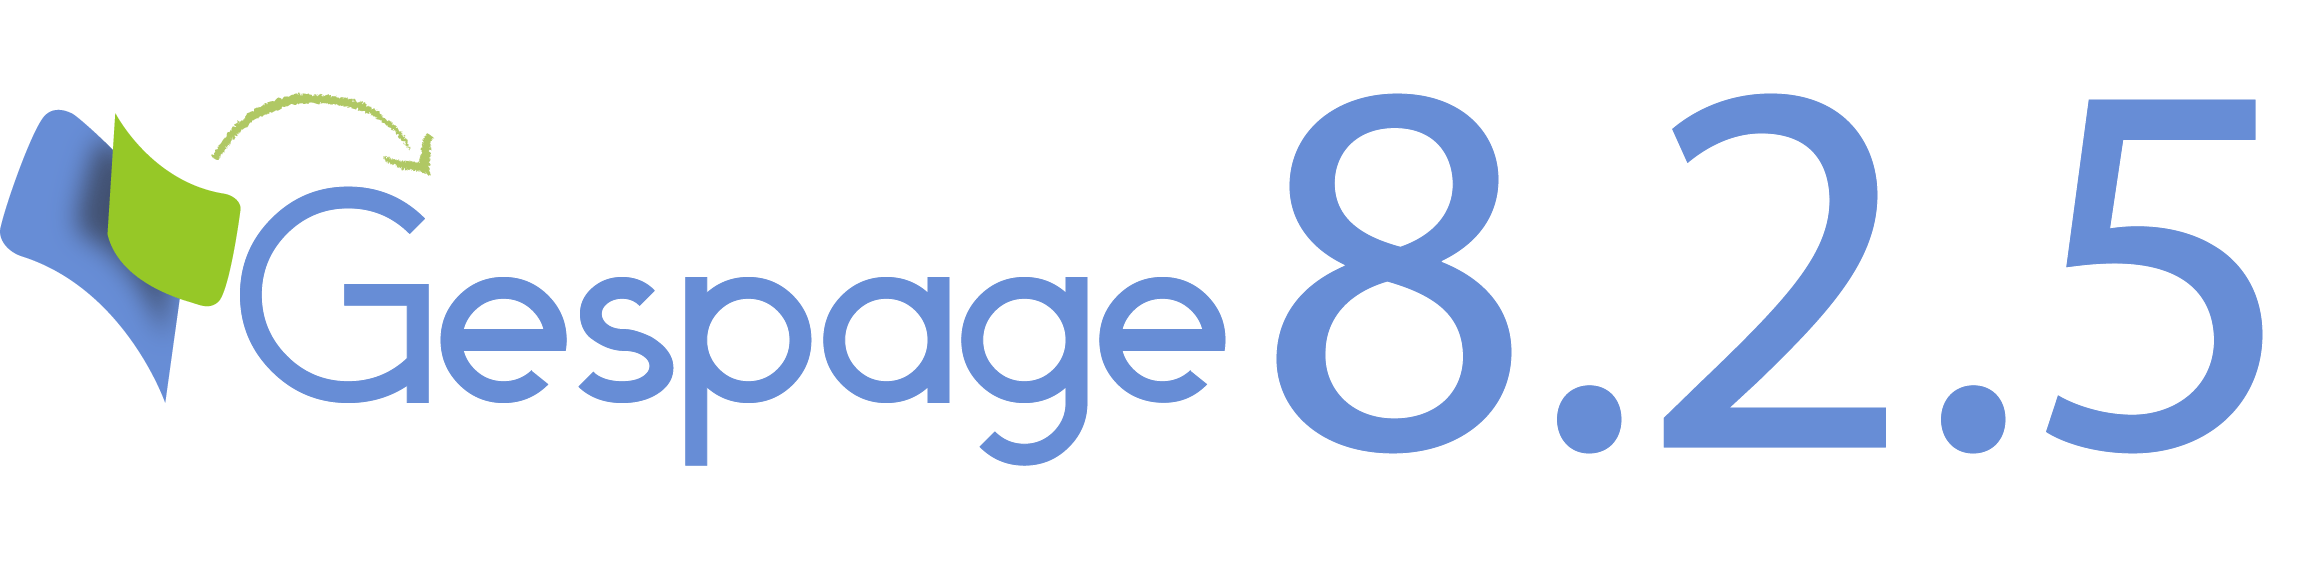 New version 8.2.5 of Gespage 1 • Gespage